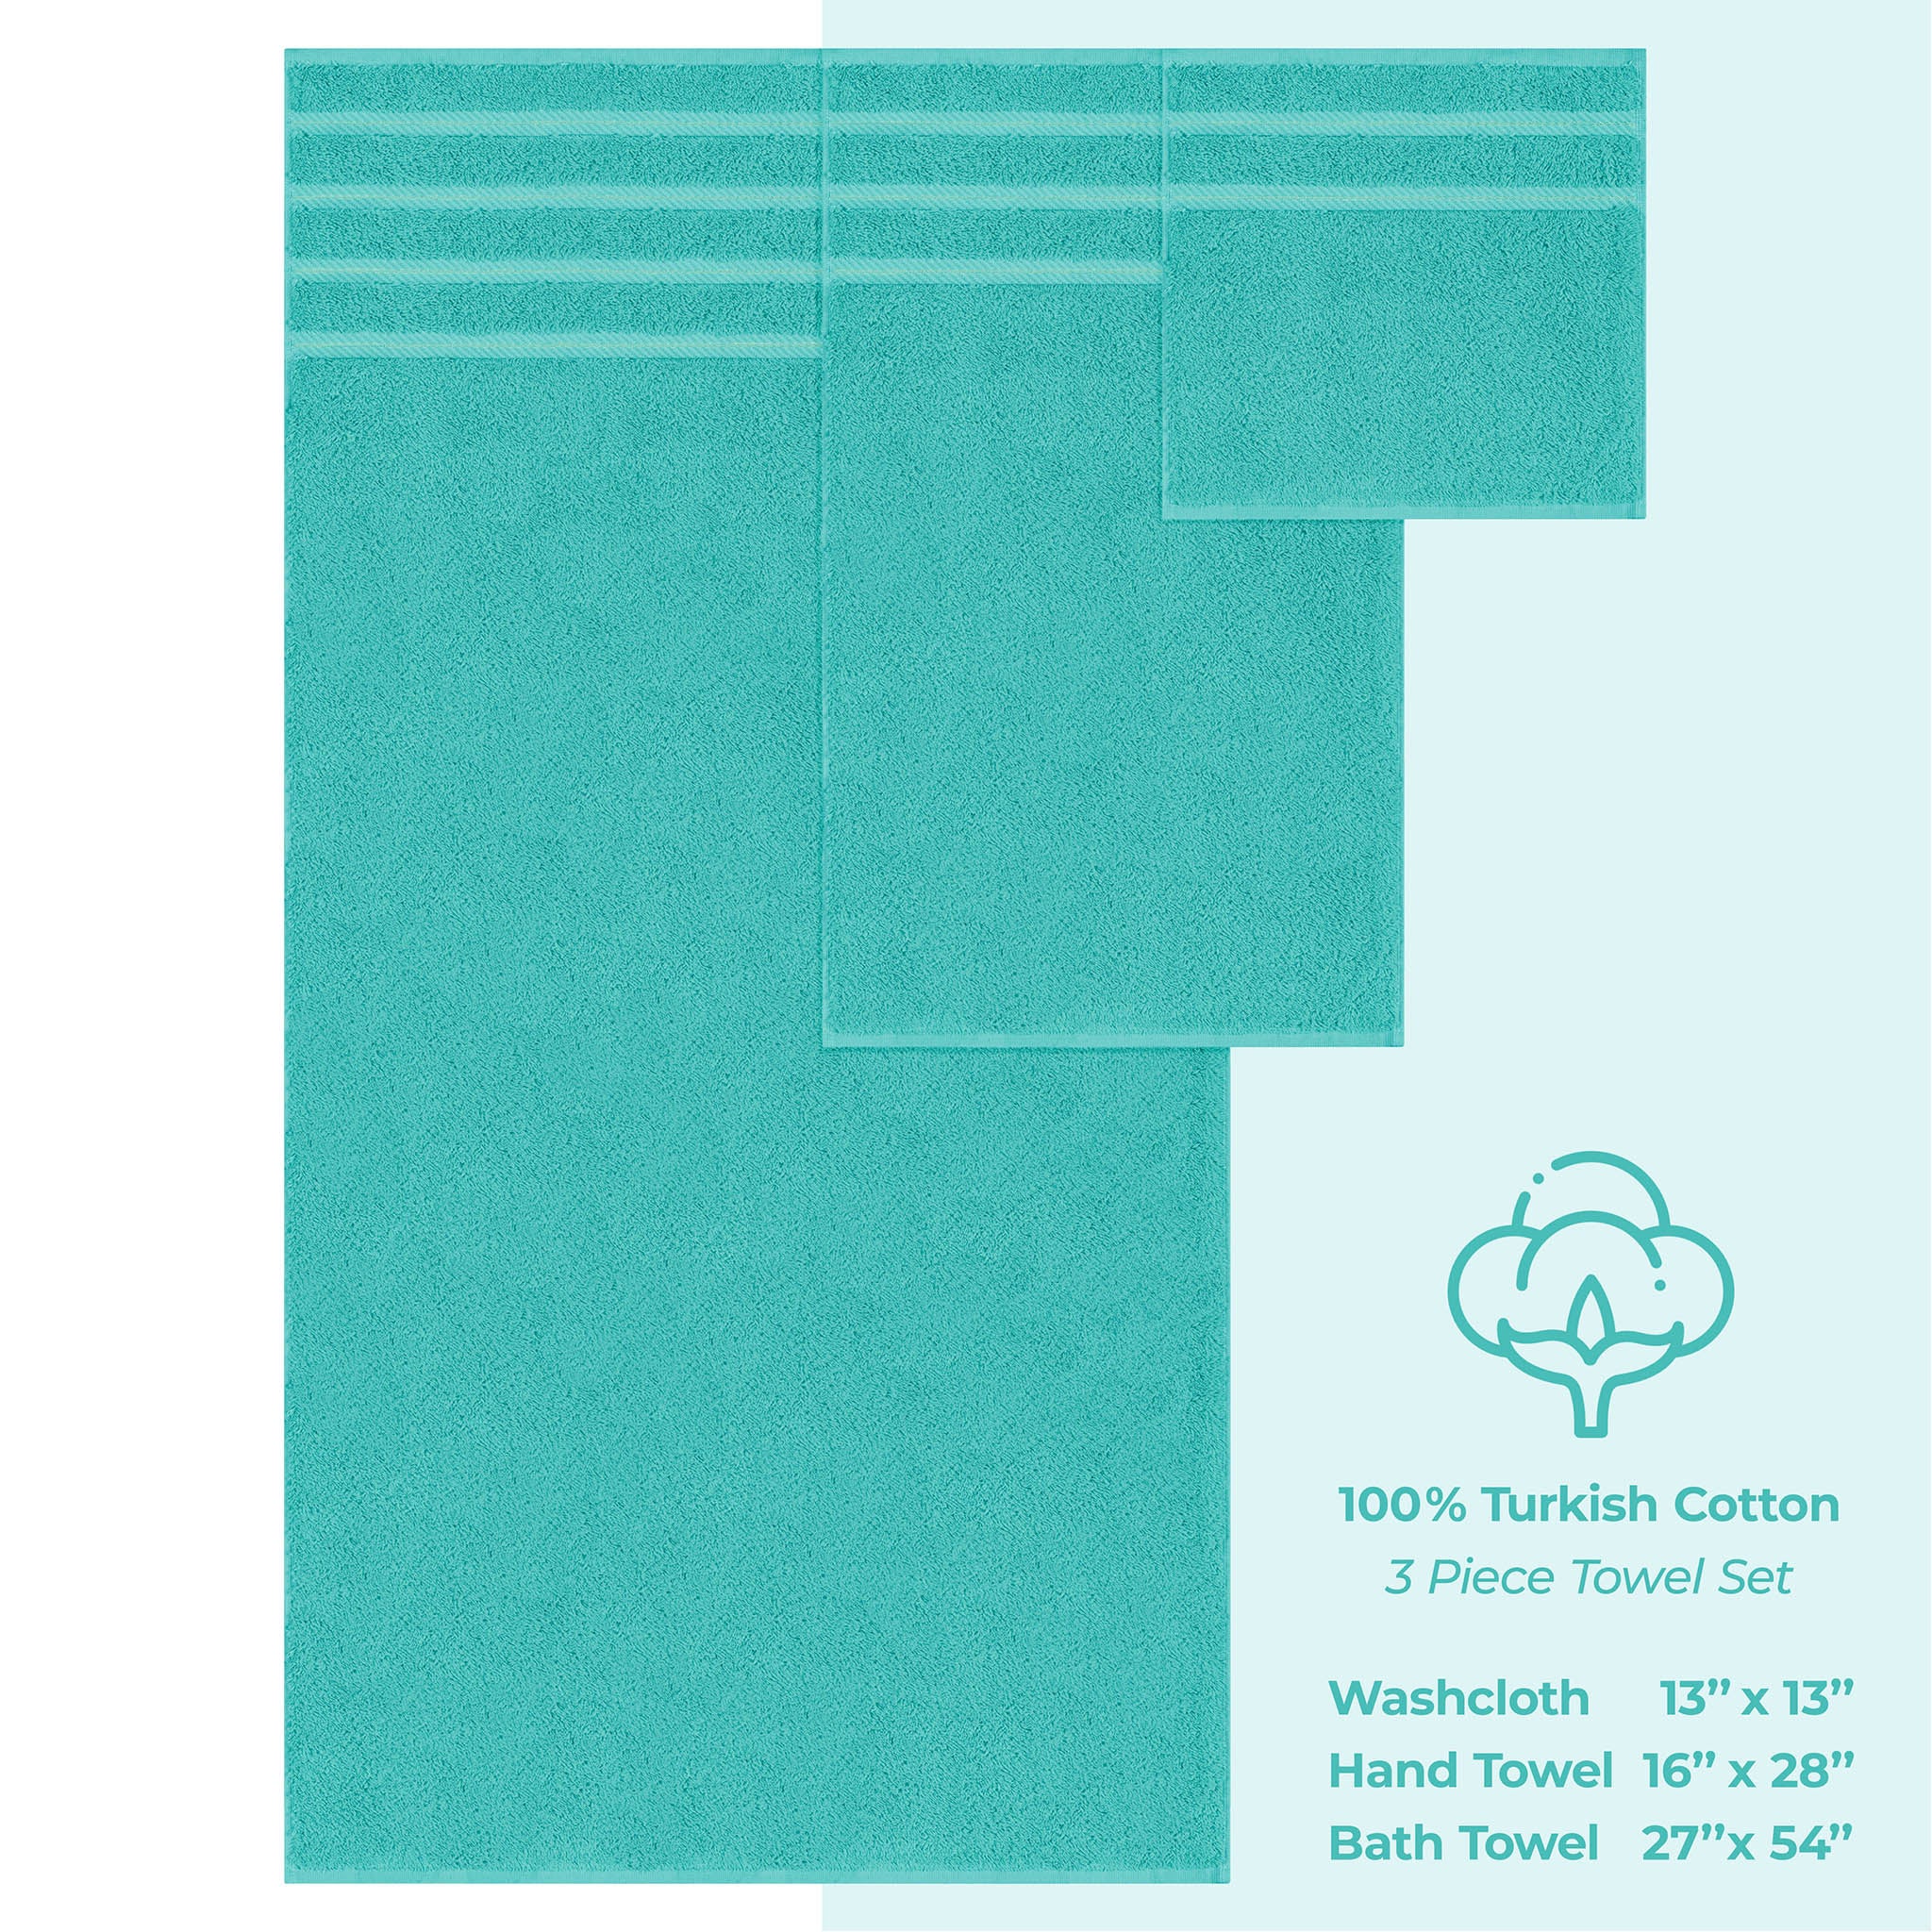 American Soft Linen 3 Piece Luxury Hotel Towel Set 20 set case pack turquoise-blue-4